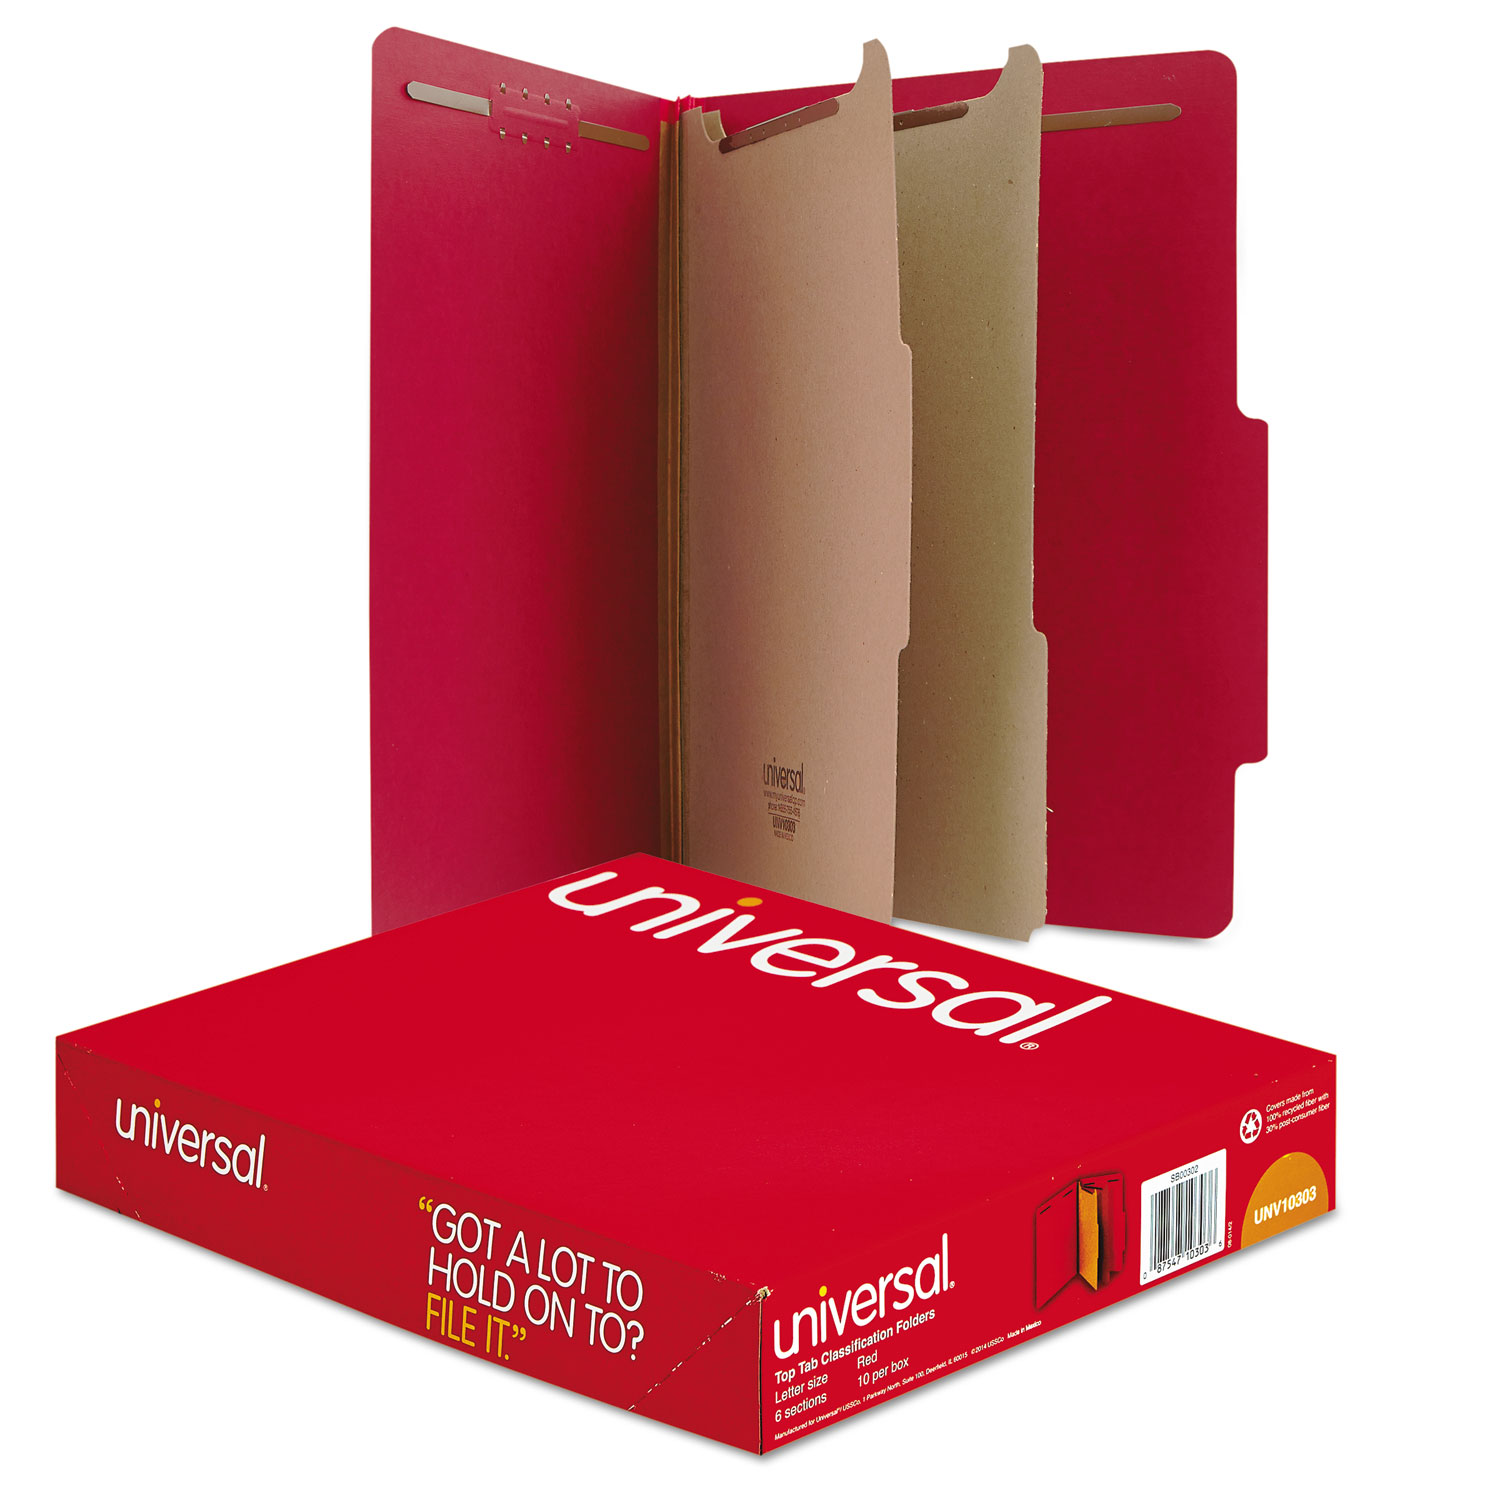  Universal UNV10303 Bright Colored Pressboard Classification Folders, 2 Dividers, Letter Size, Ruby Red, 10/Box (UNV10303) 